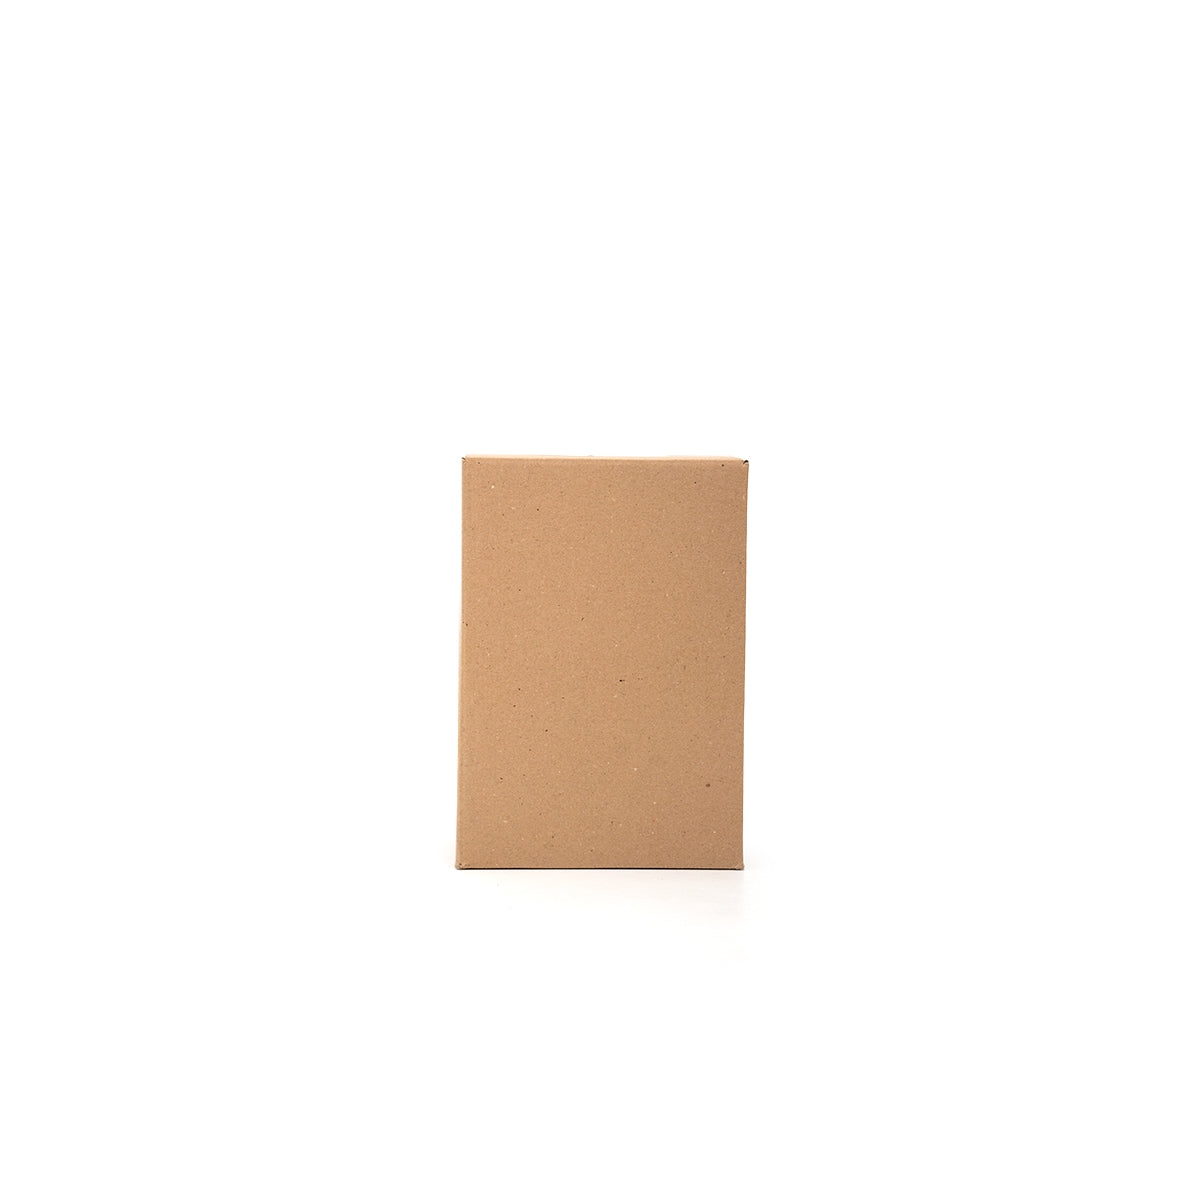 Microtriple American style cardboard box EB 22,8x15,6x30,3/32,3 cm brown adjustable SCD22